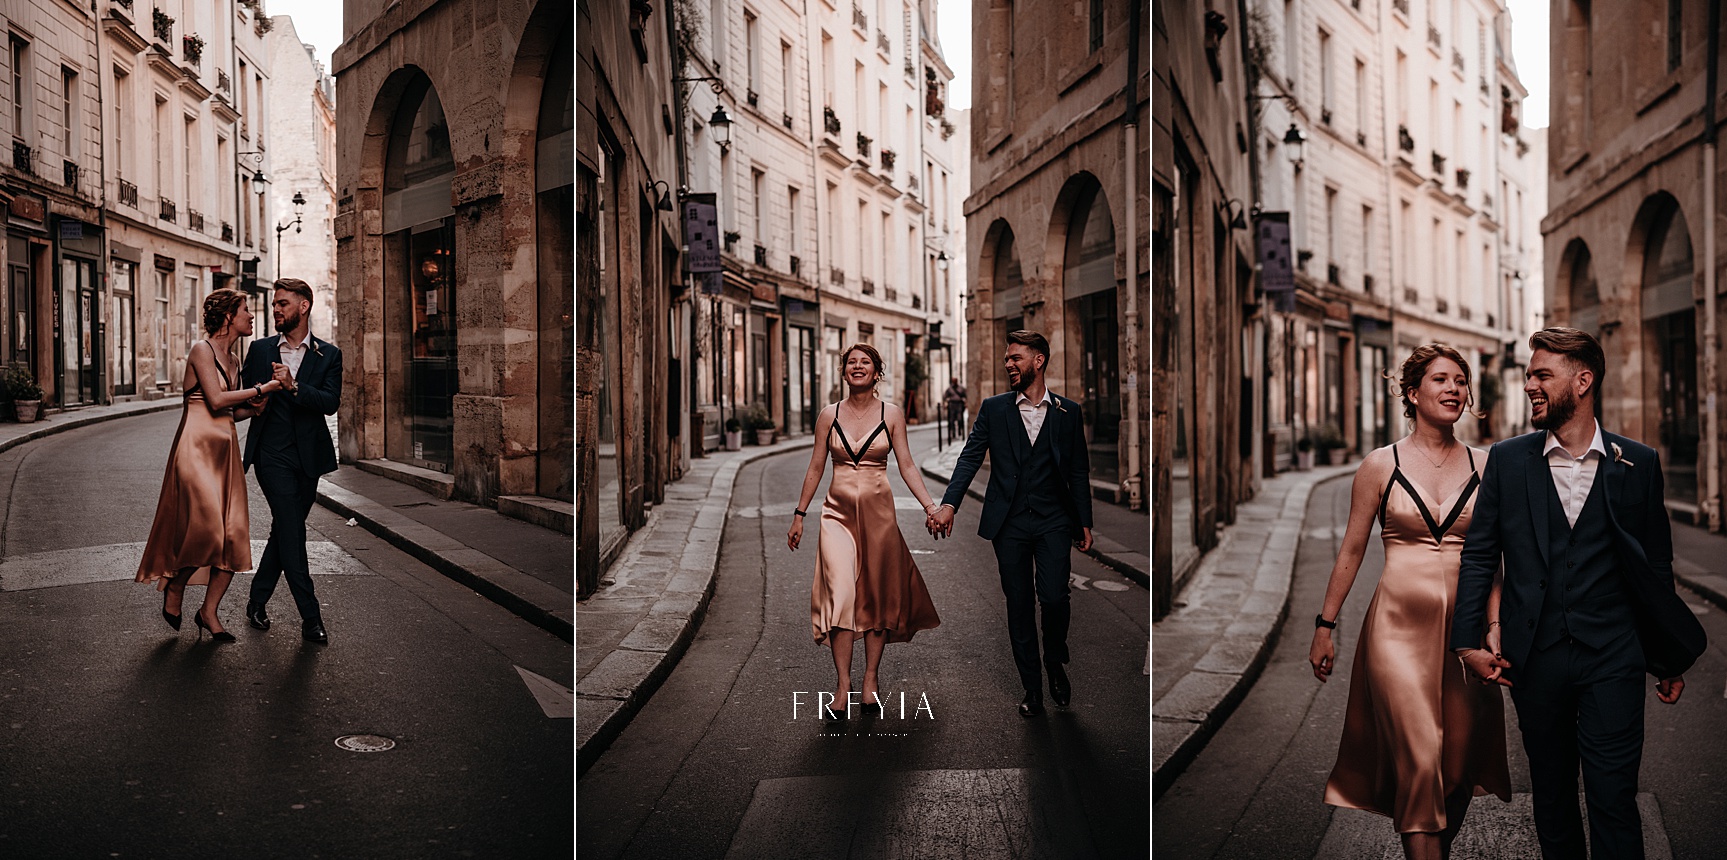 P + F |  mariage reportage alternatif moody intime vintage naturel boho boheme |  PHOTOGRAPHE mariage PARIS france destination  | FREYIA photography_-333.jpg (Copy)